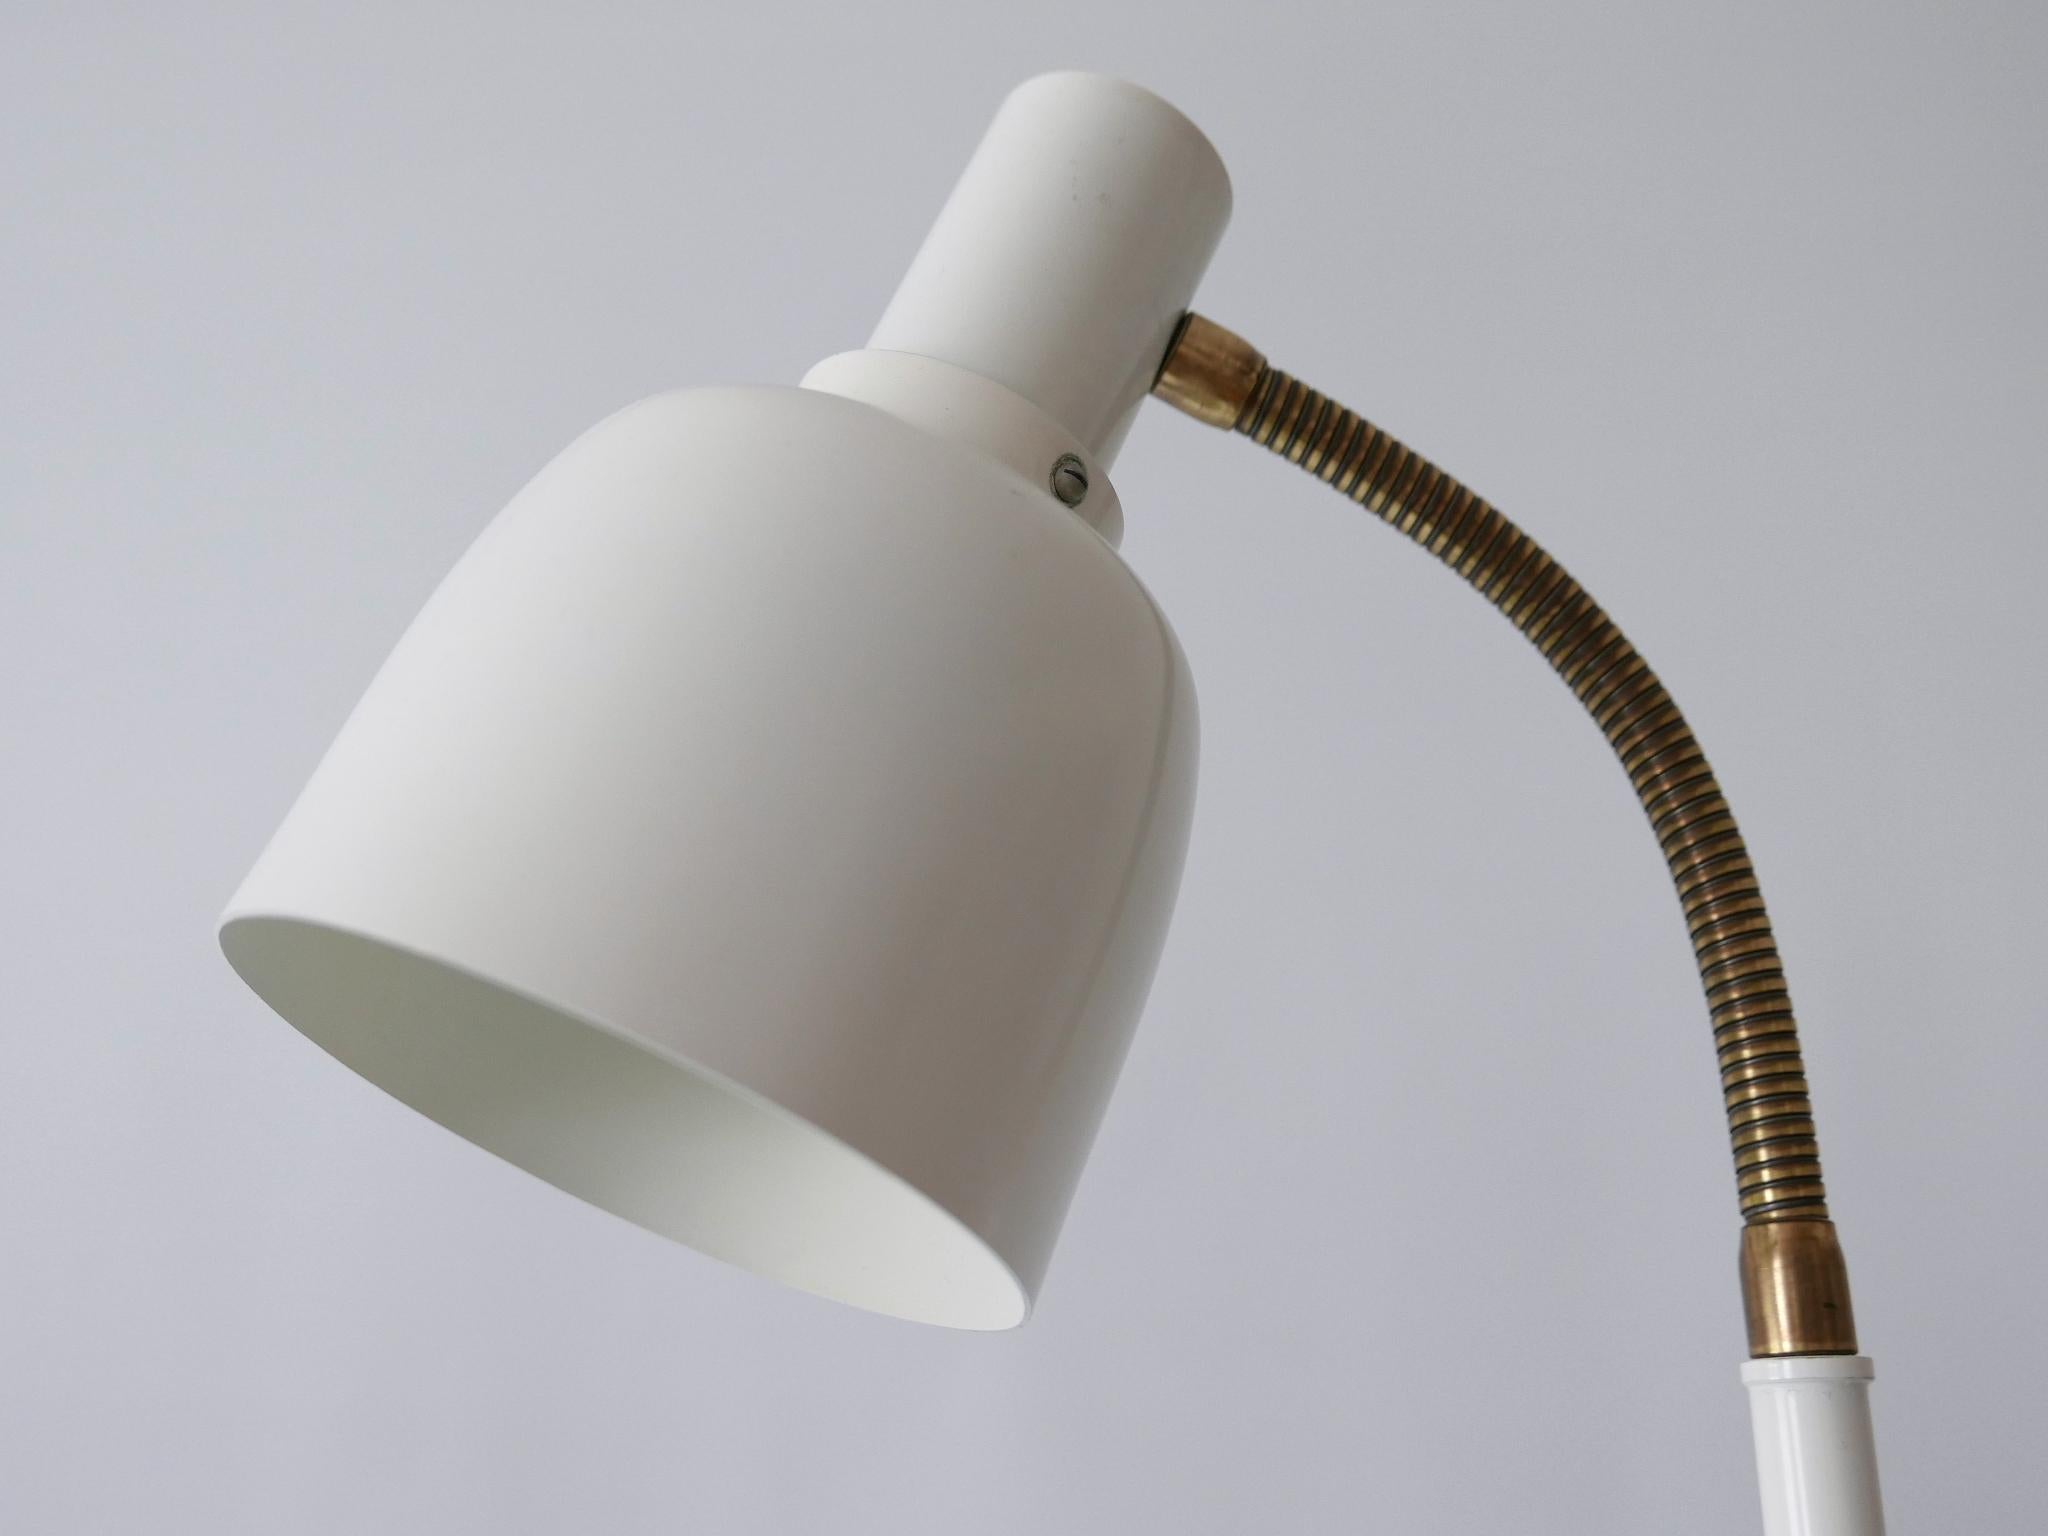 Rare Mid-Century Modern Floor Lamp or Reading Light by Hans-Agne Jakobsson 1960s For Sale 5